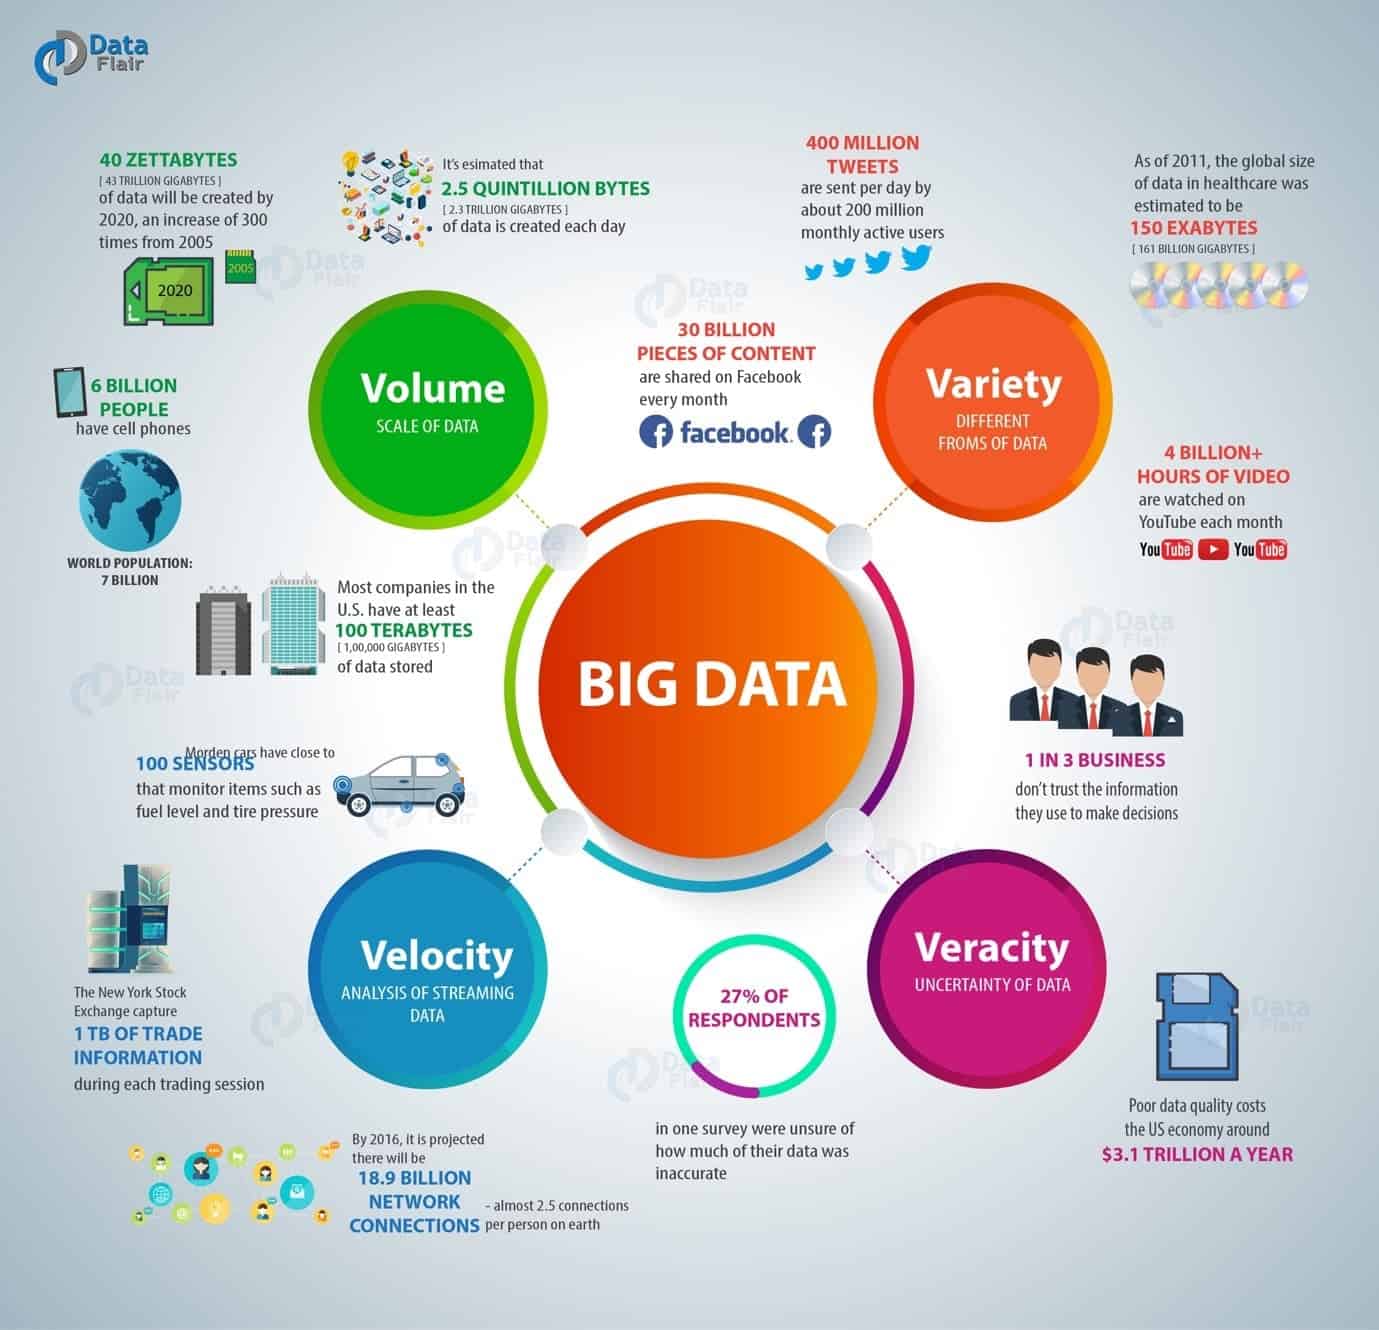 Big Data Core Characteristics - Discover the core characteristics